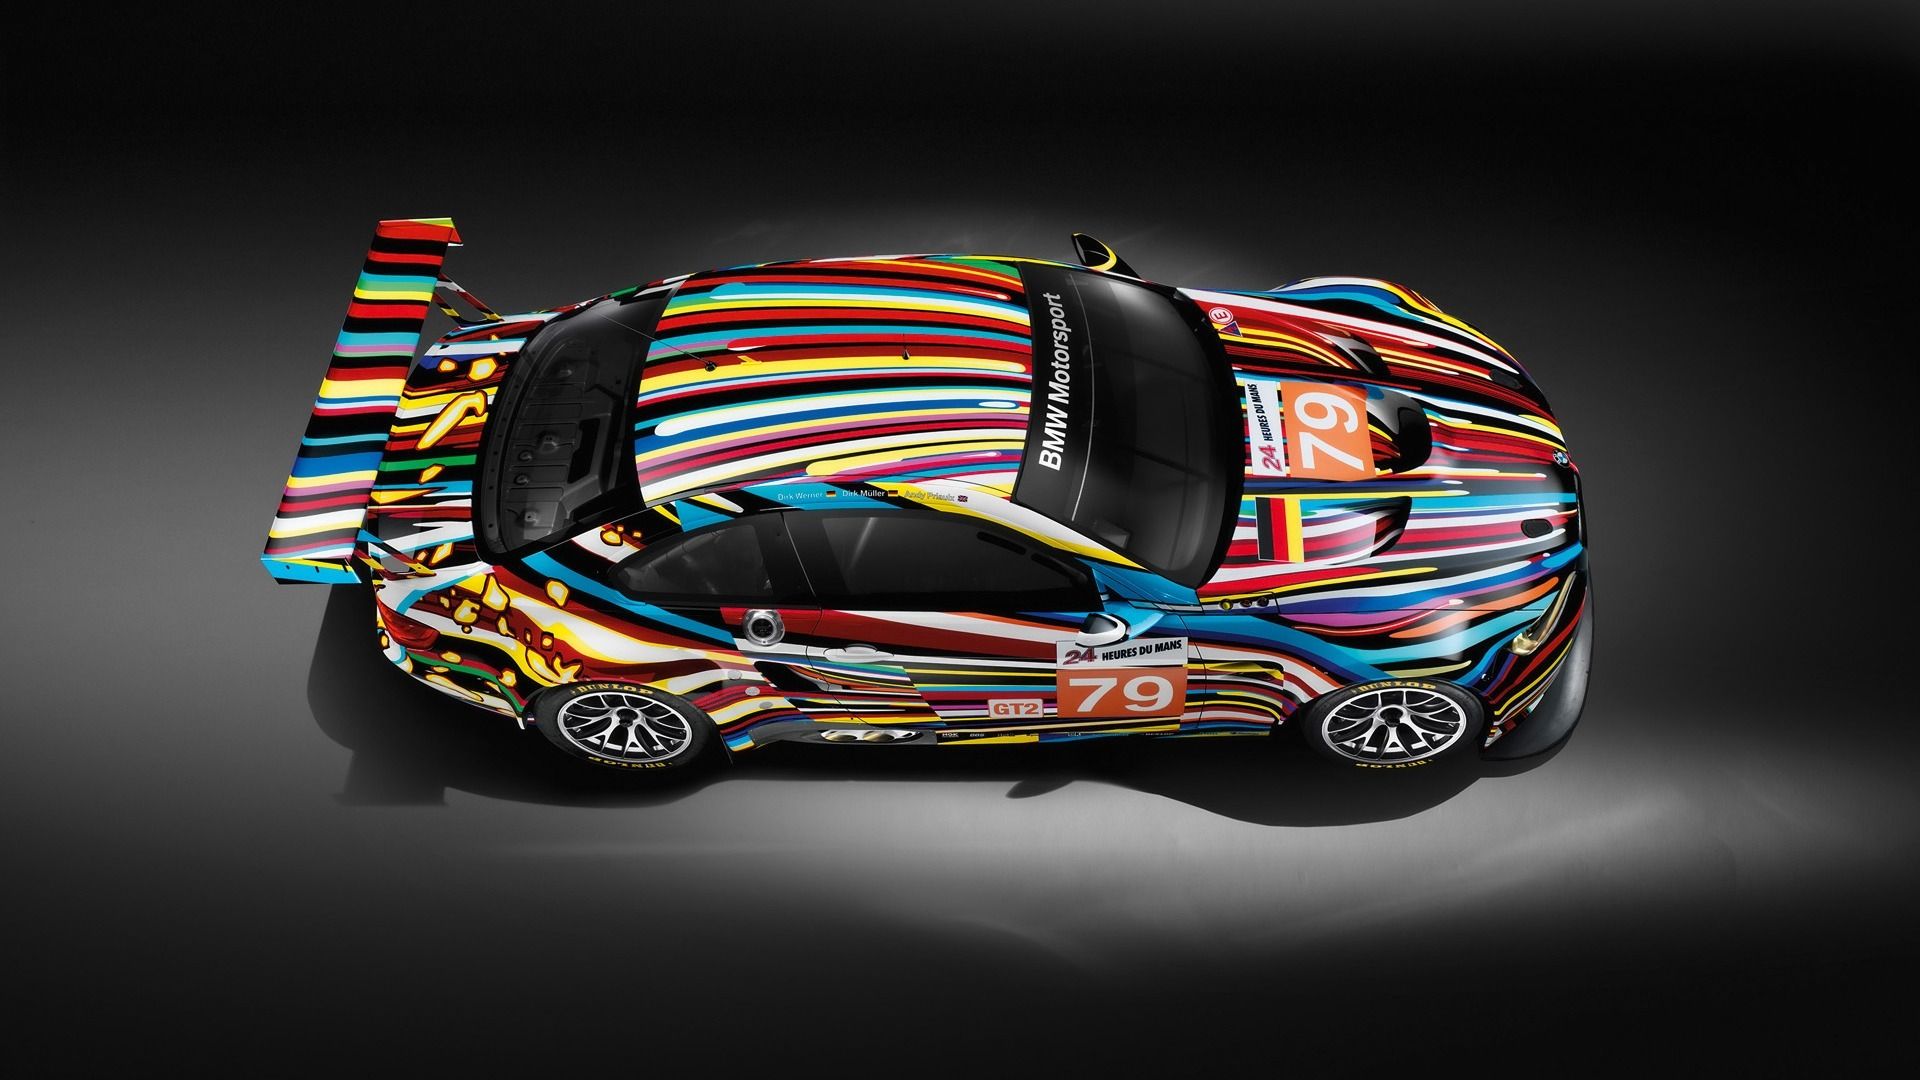 Sports Car Colorful Abstract Digital Art 4K,Colorful Abstract Digital Art